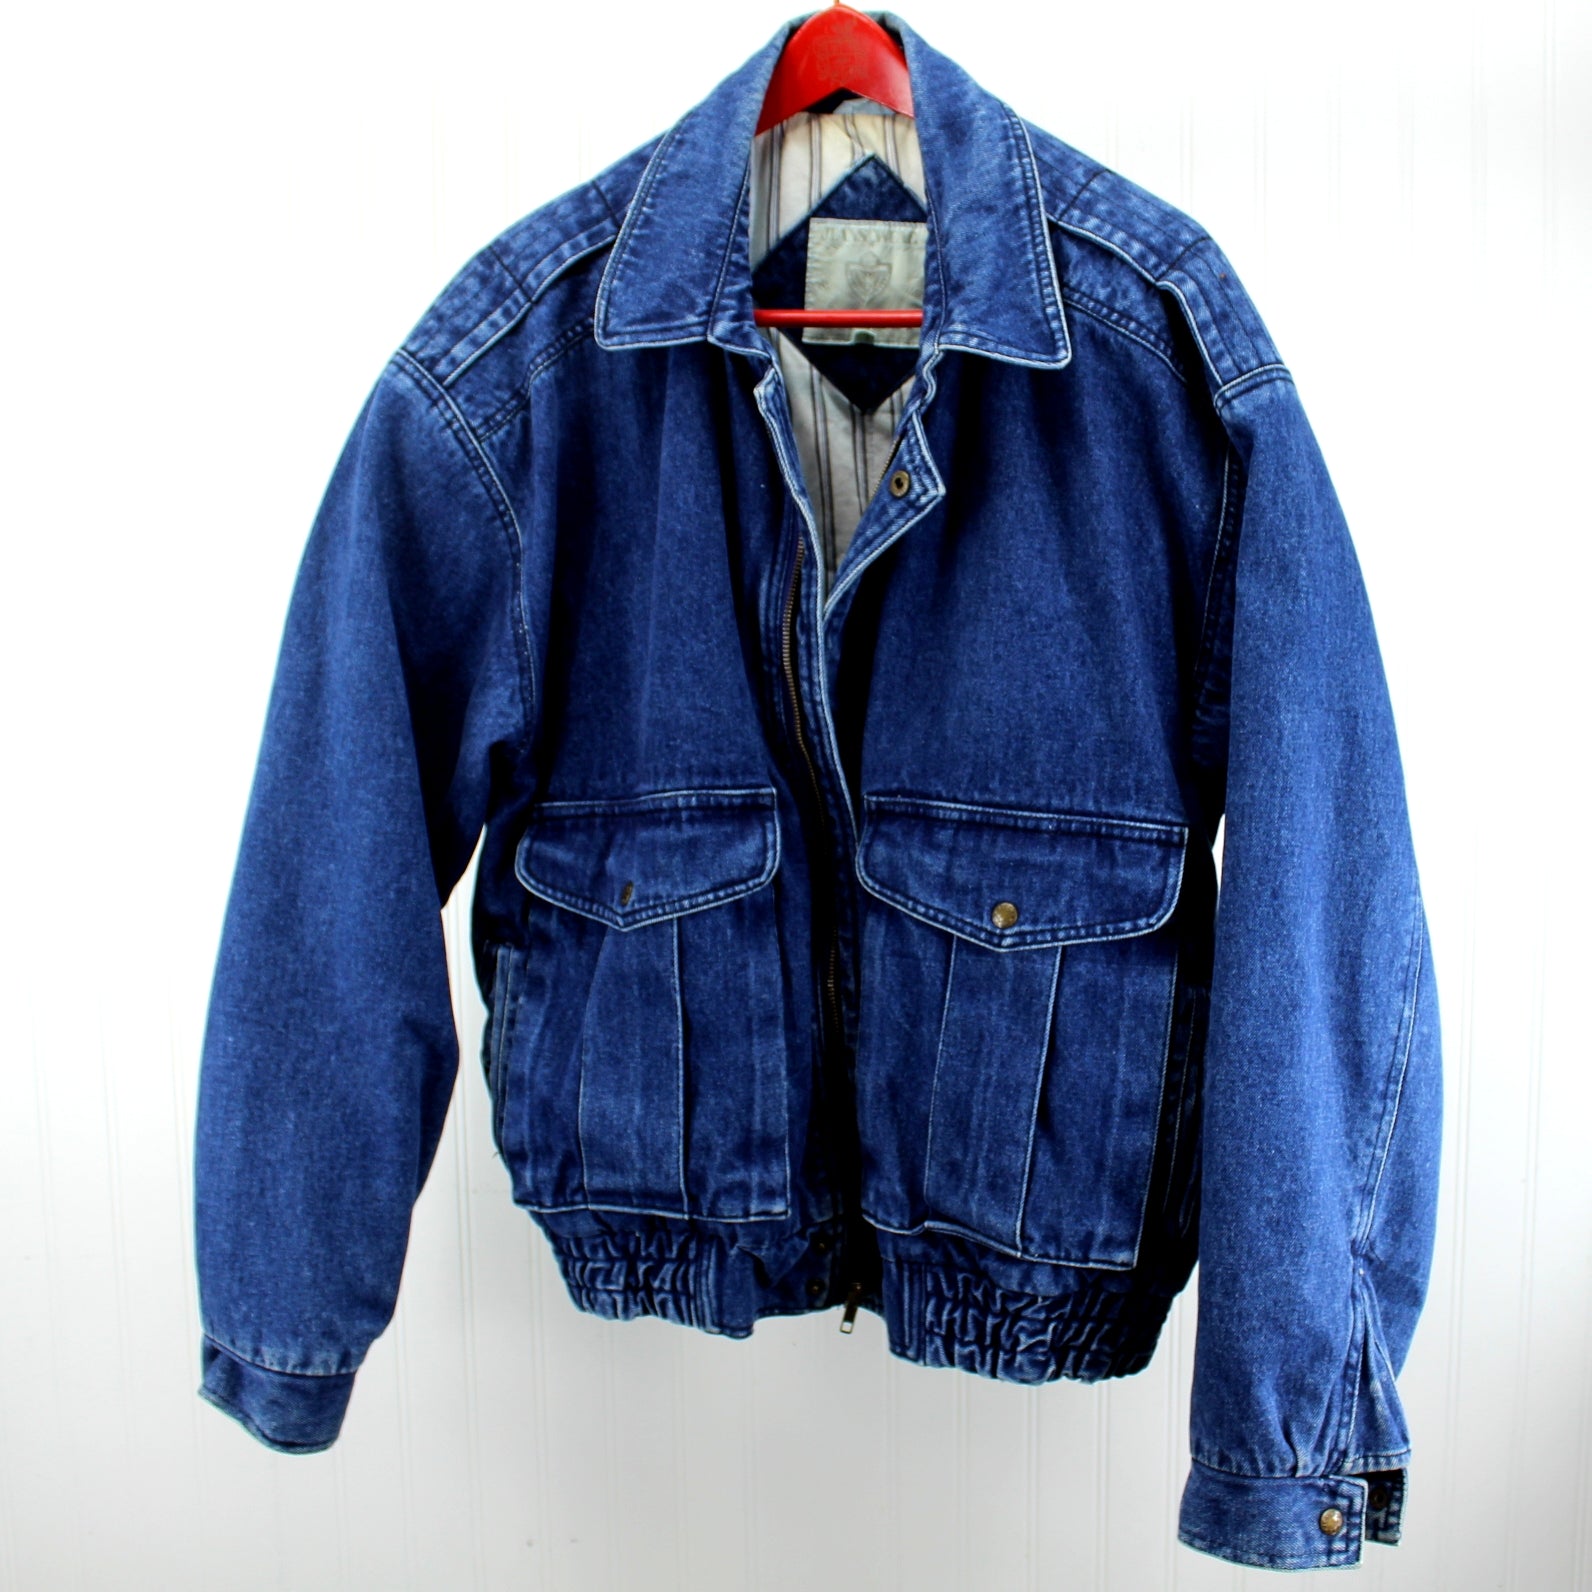 Jeans Wear Trent Blue Denim Cotton Jacket Lined Blue White Stripe Great Cut Size L heavy duty zipper front and snaps